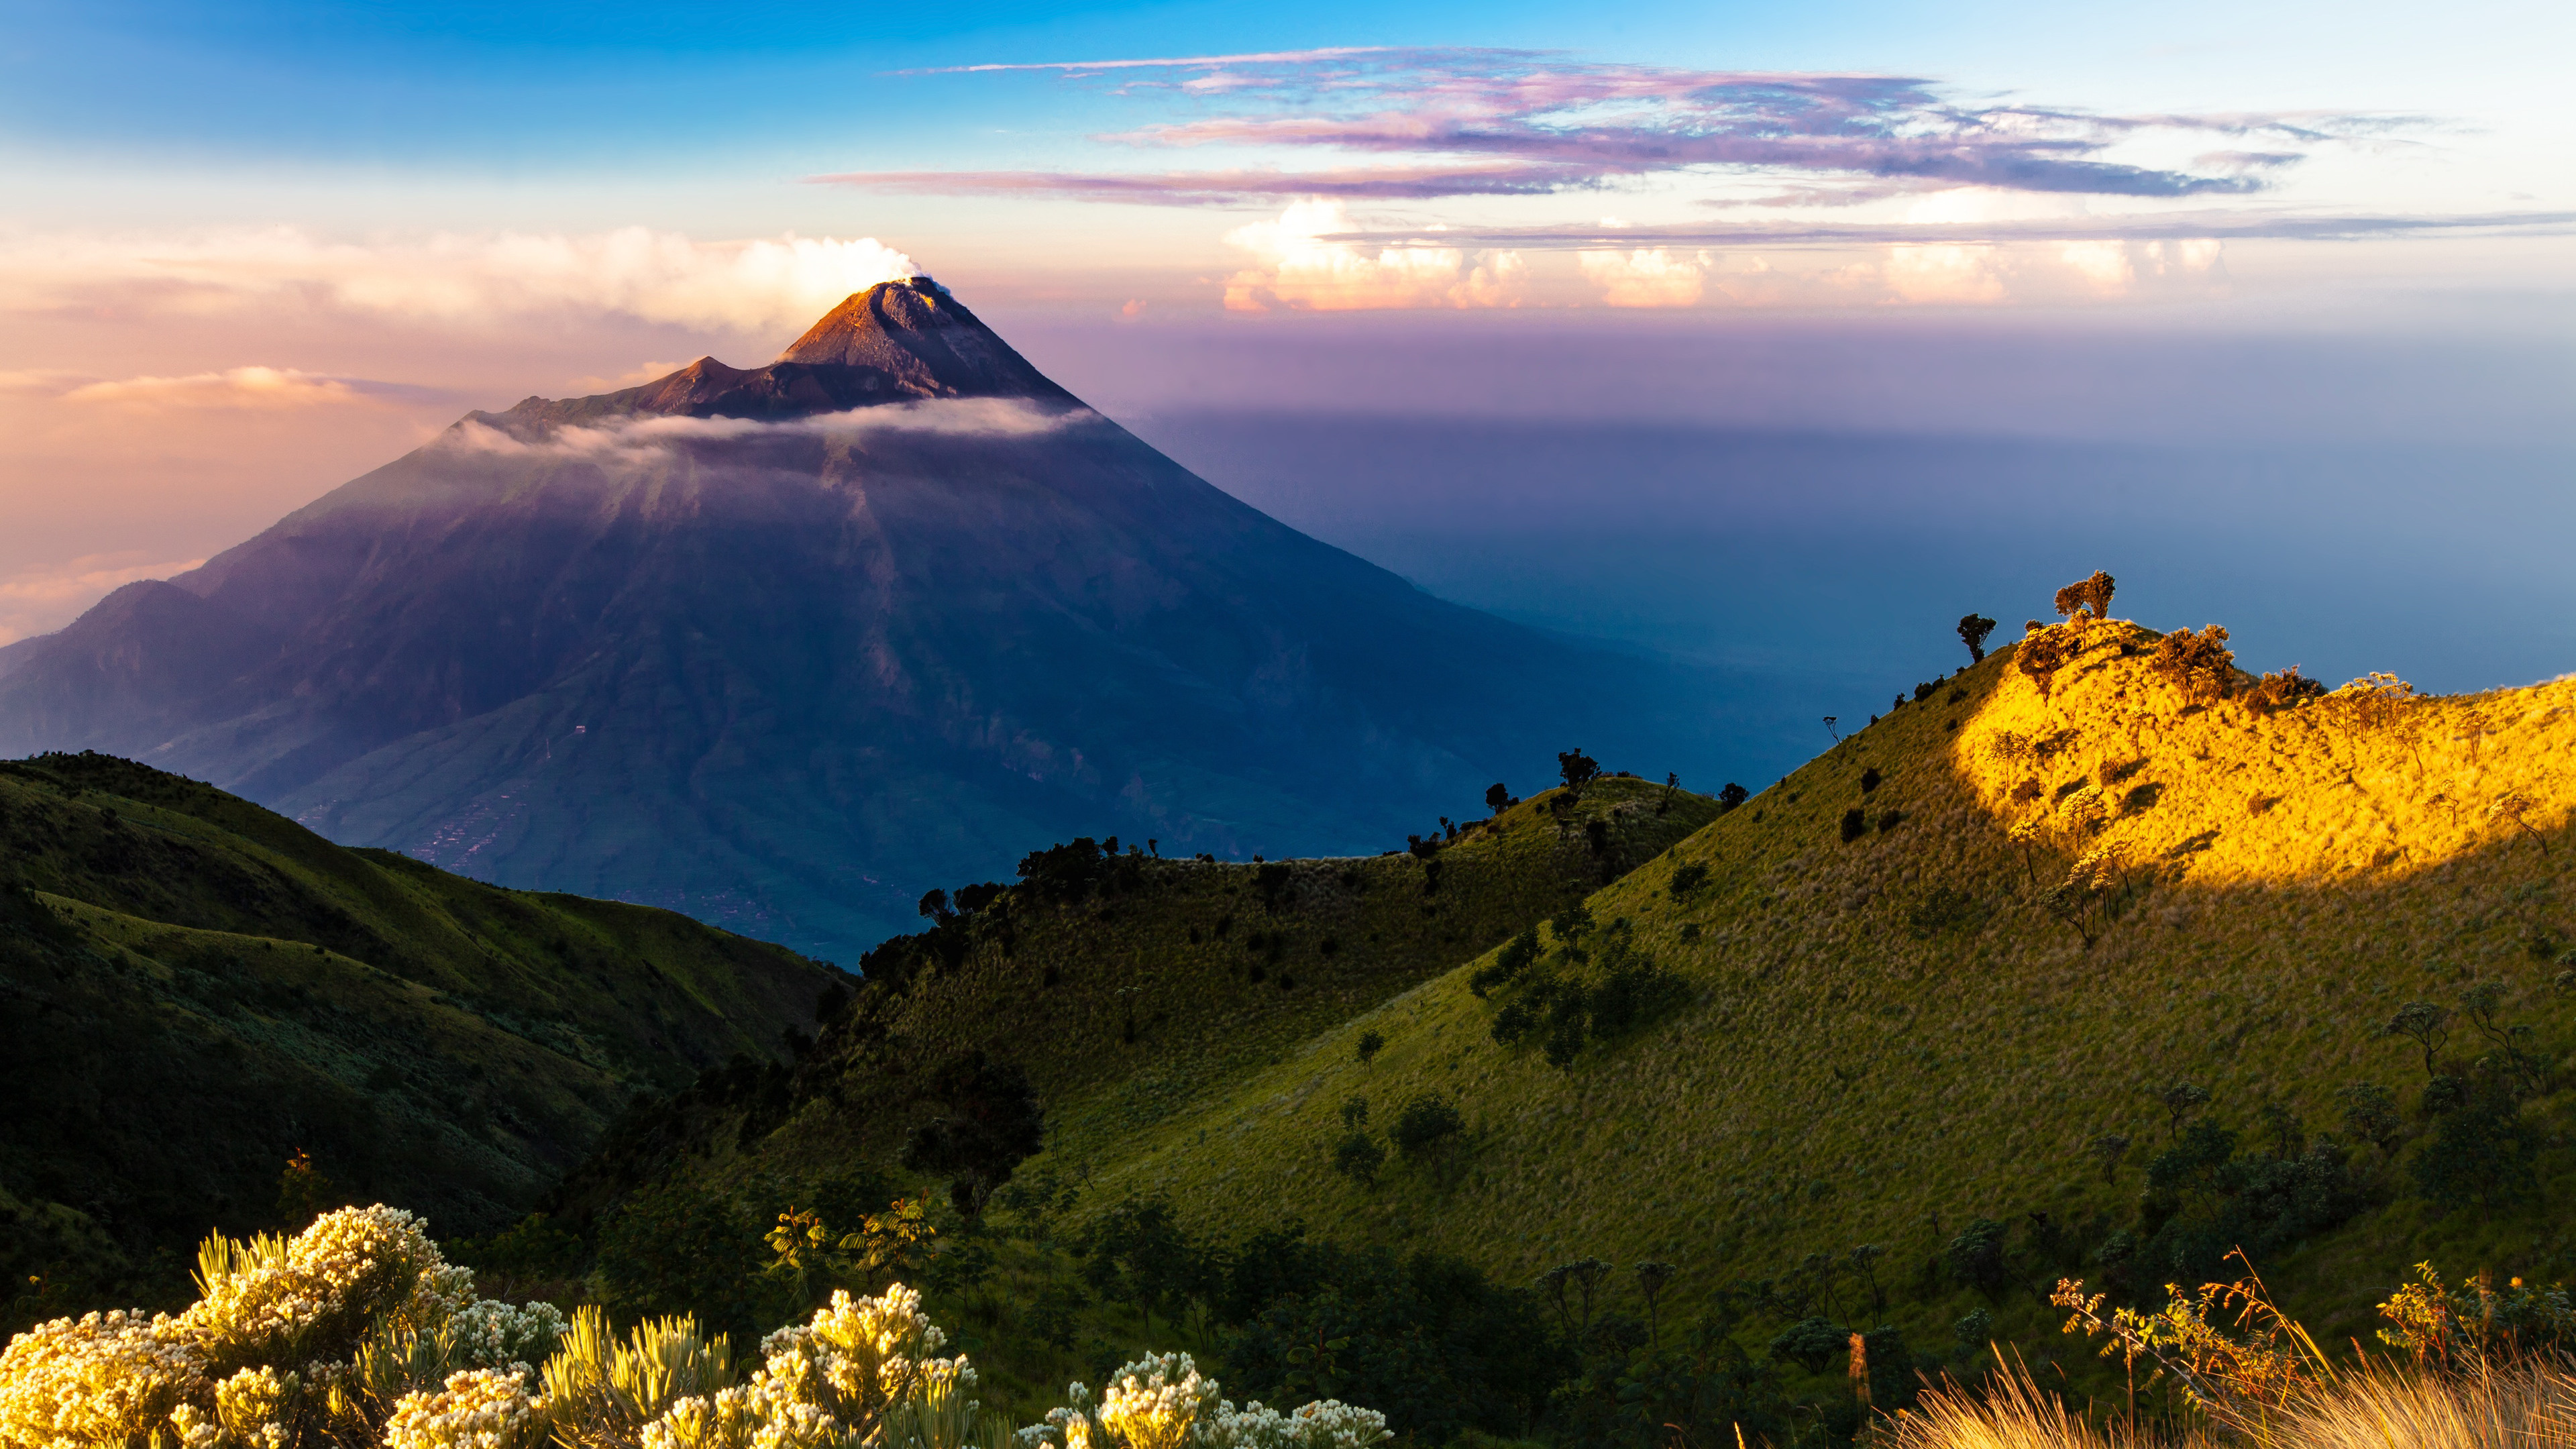 Java island's volcano, Serene nature's spectacle, Stunning 4k wallpaper, Scenic landscape, 3840x2160 4K Desktop